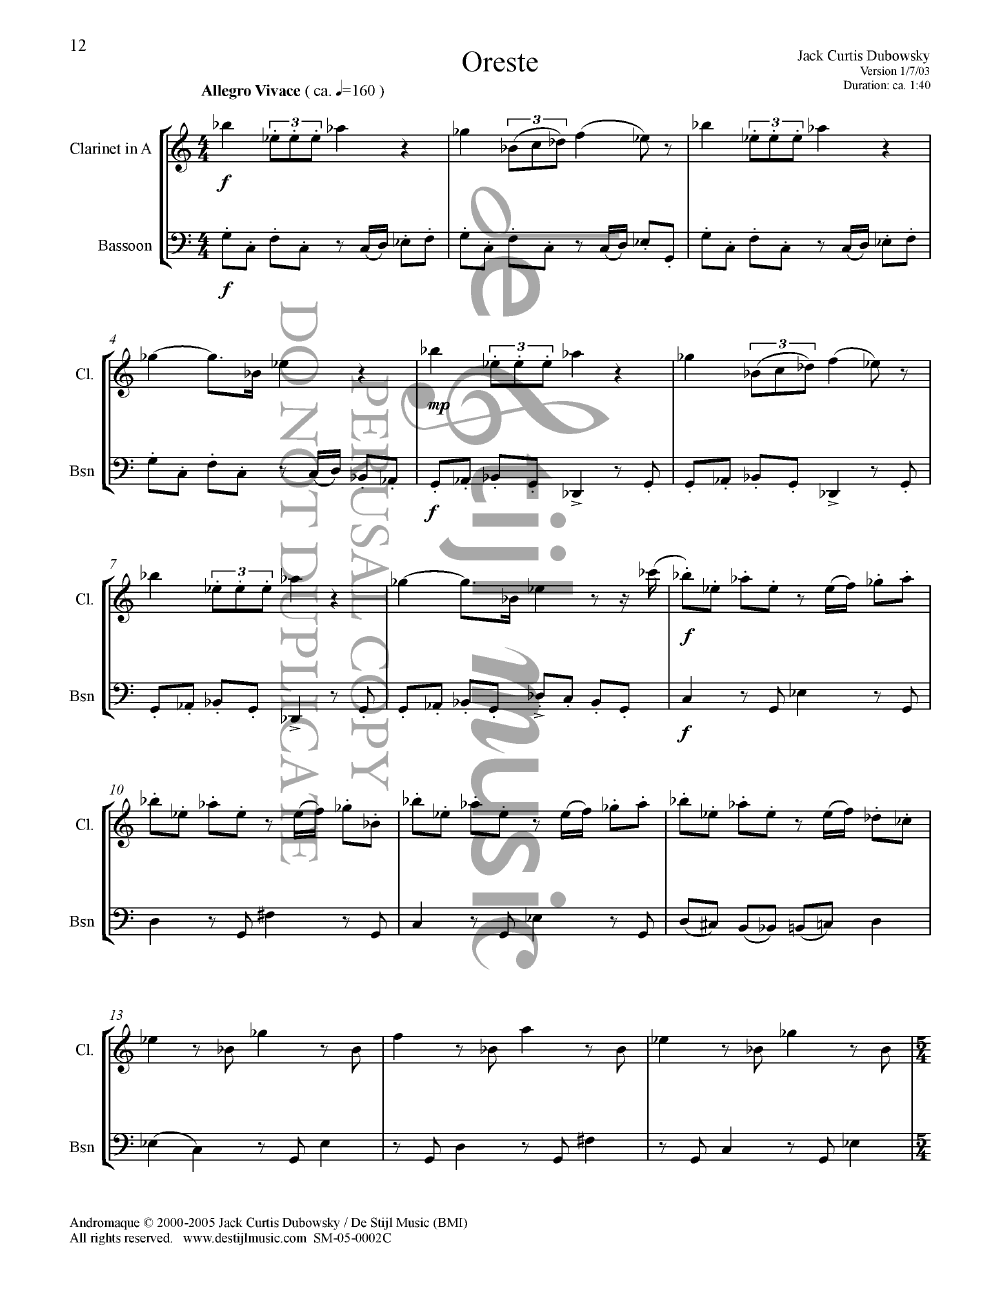 Andromaque: Six Bongatelles A Clarinet/ Bassoon